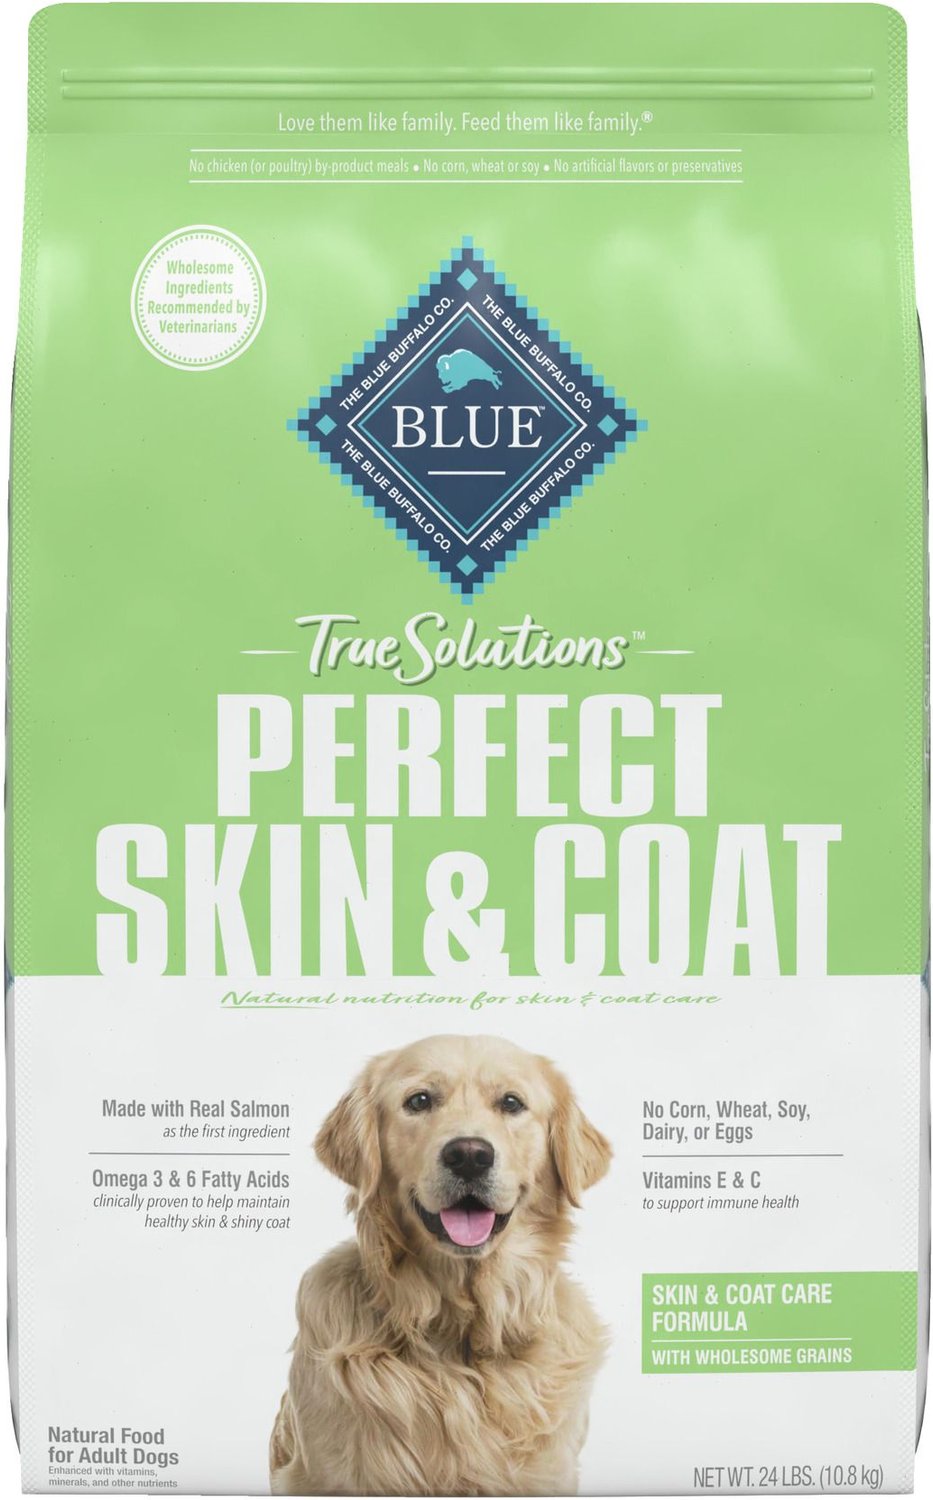 dog-food-for-healthy-skin-coat